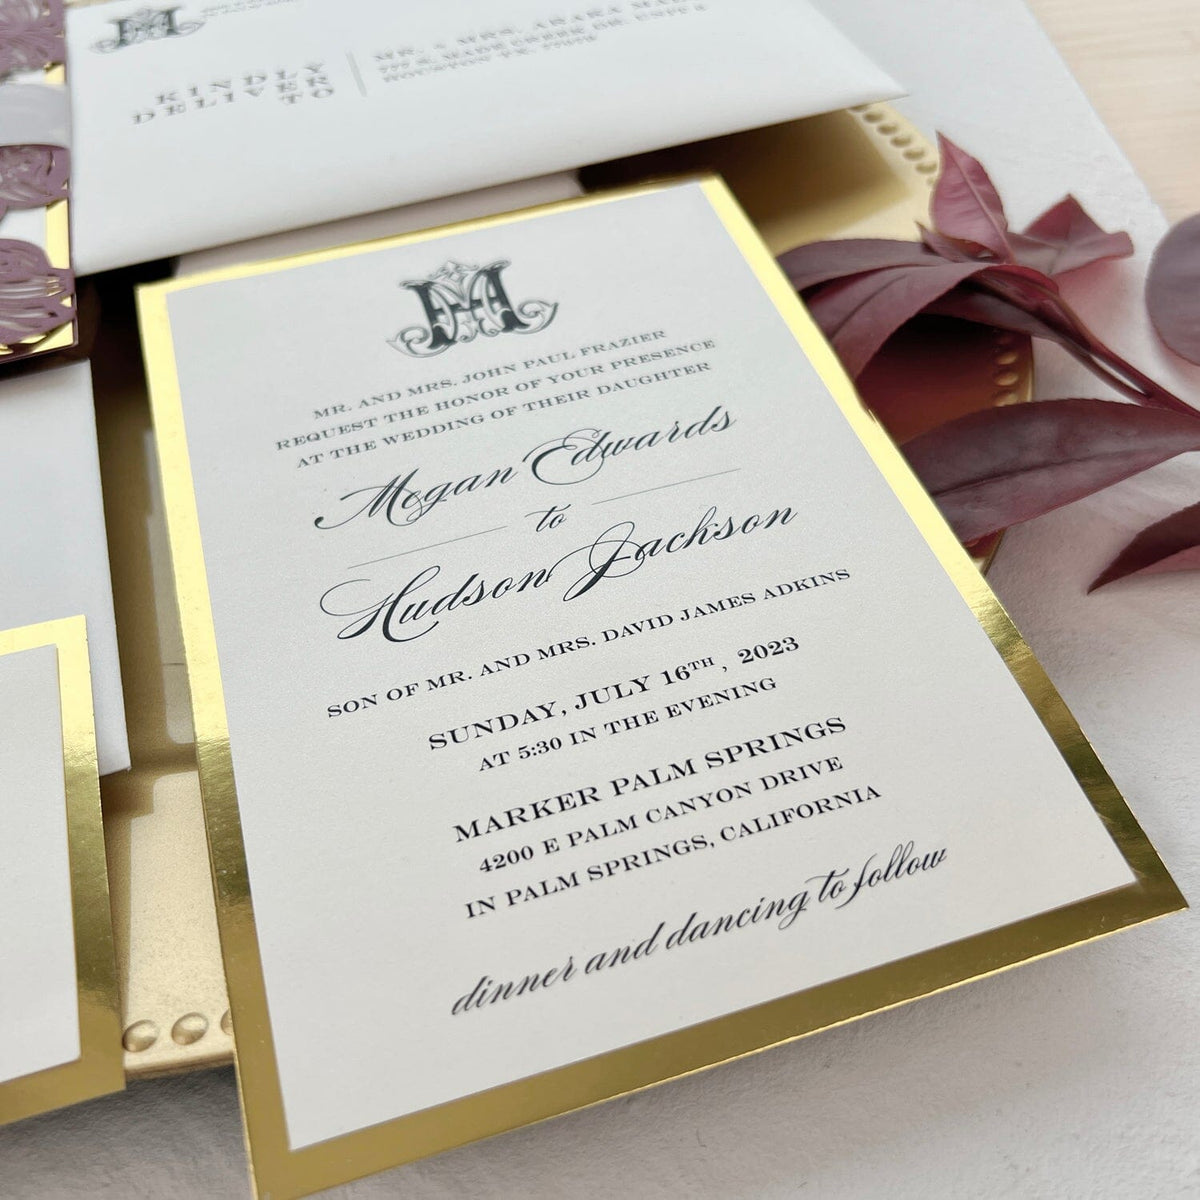 Vintage Monogram Wedding Invitation Suite for Burgundy Wedding Theme